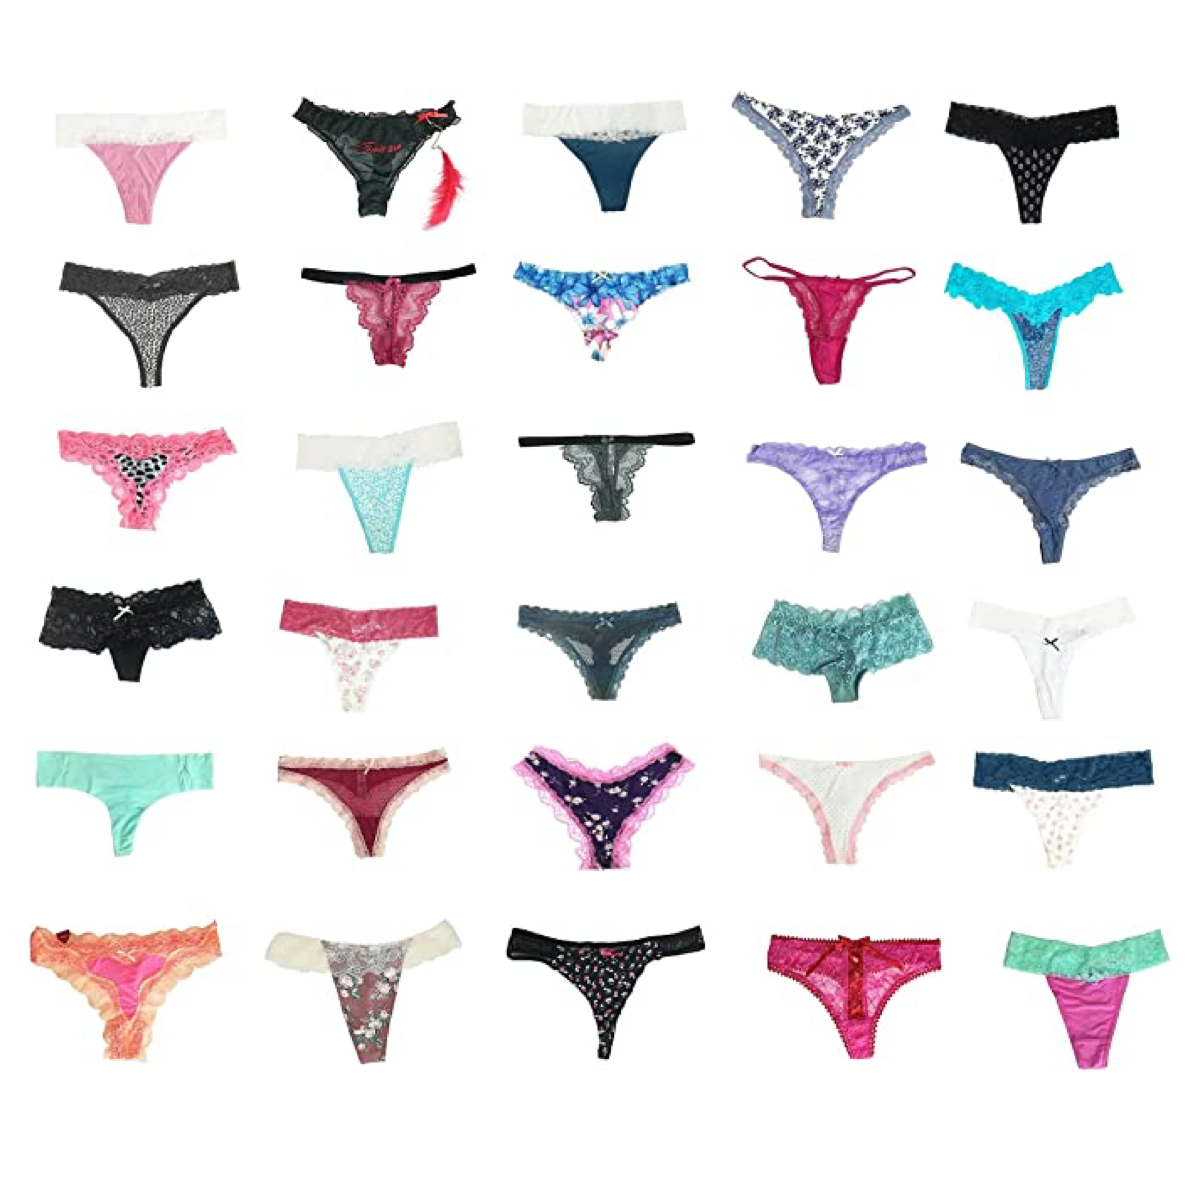 Buy Emprella Cotton Underwear Women, 8 or 5 Pack Womens Bikini